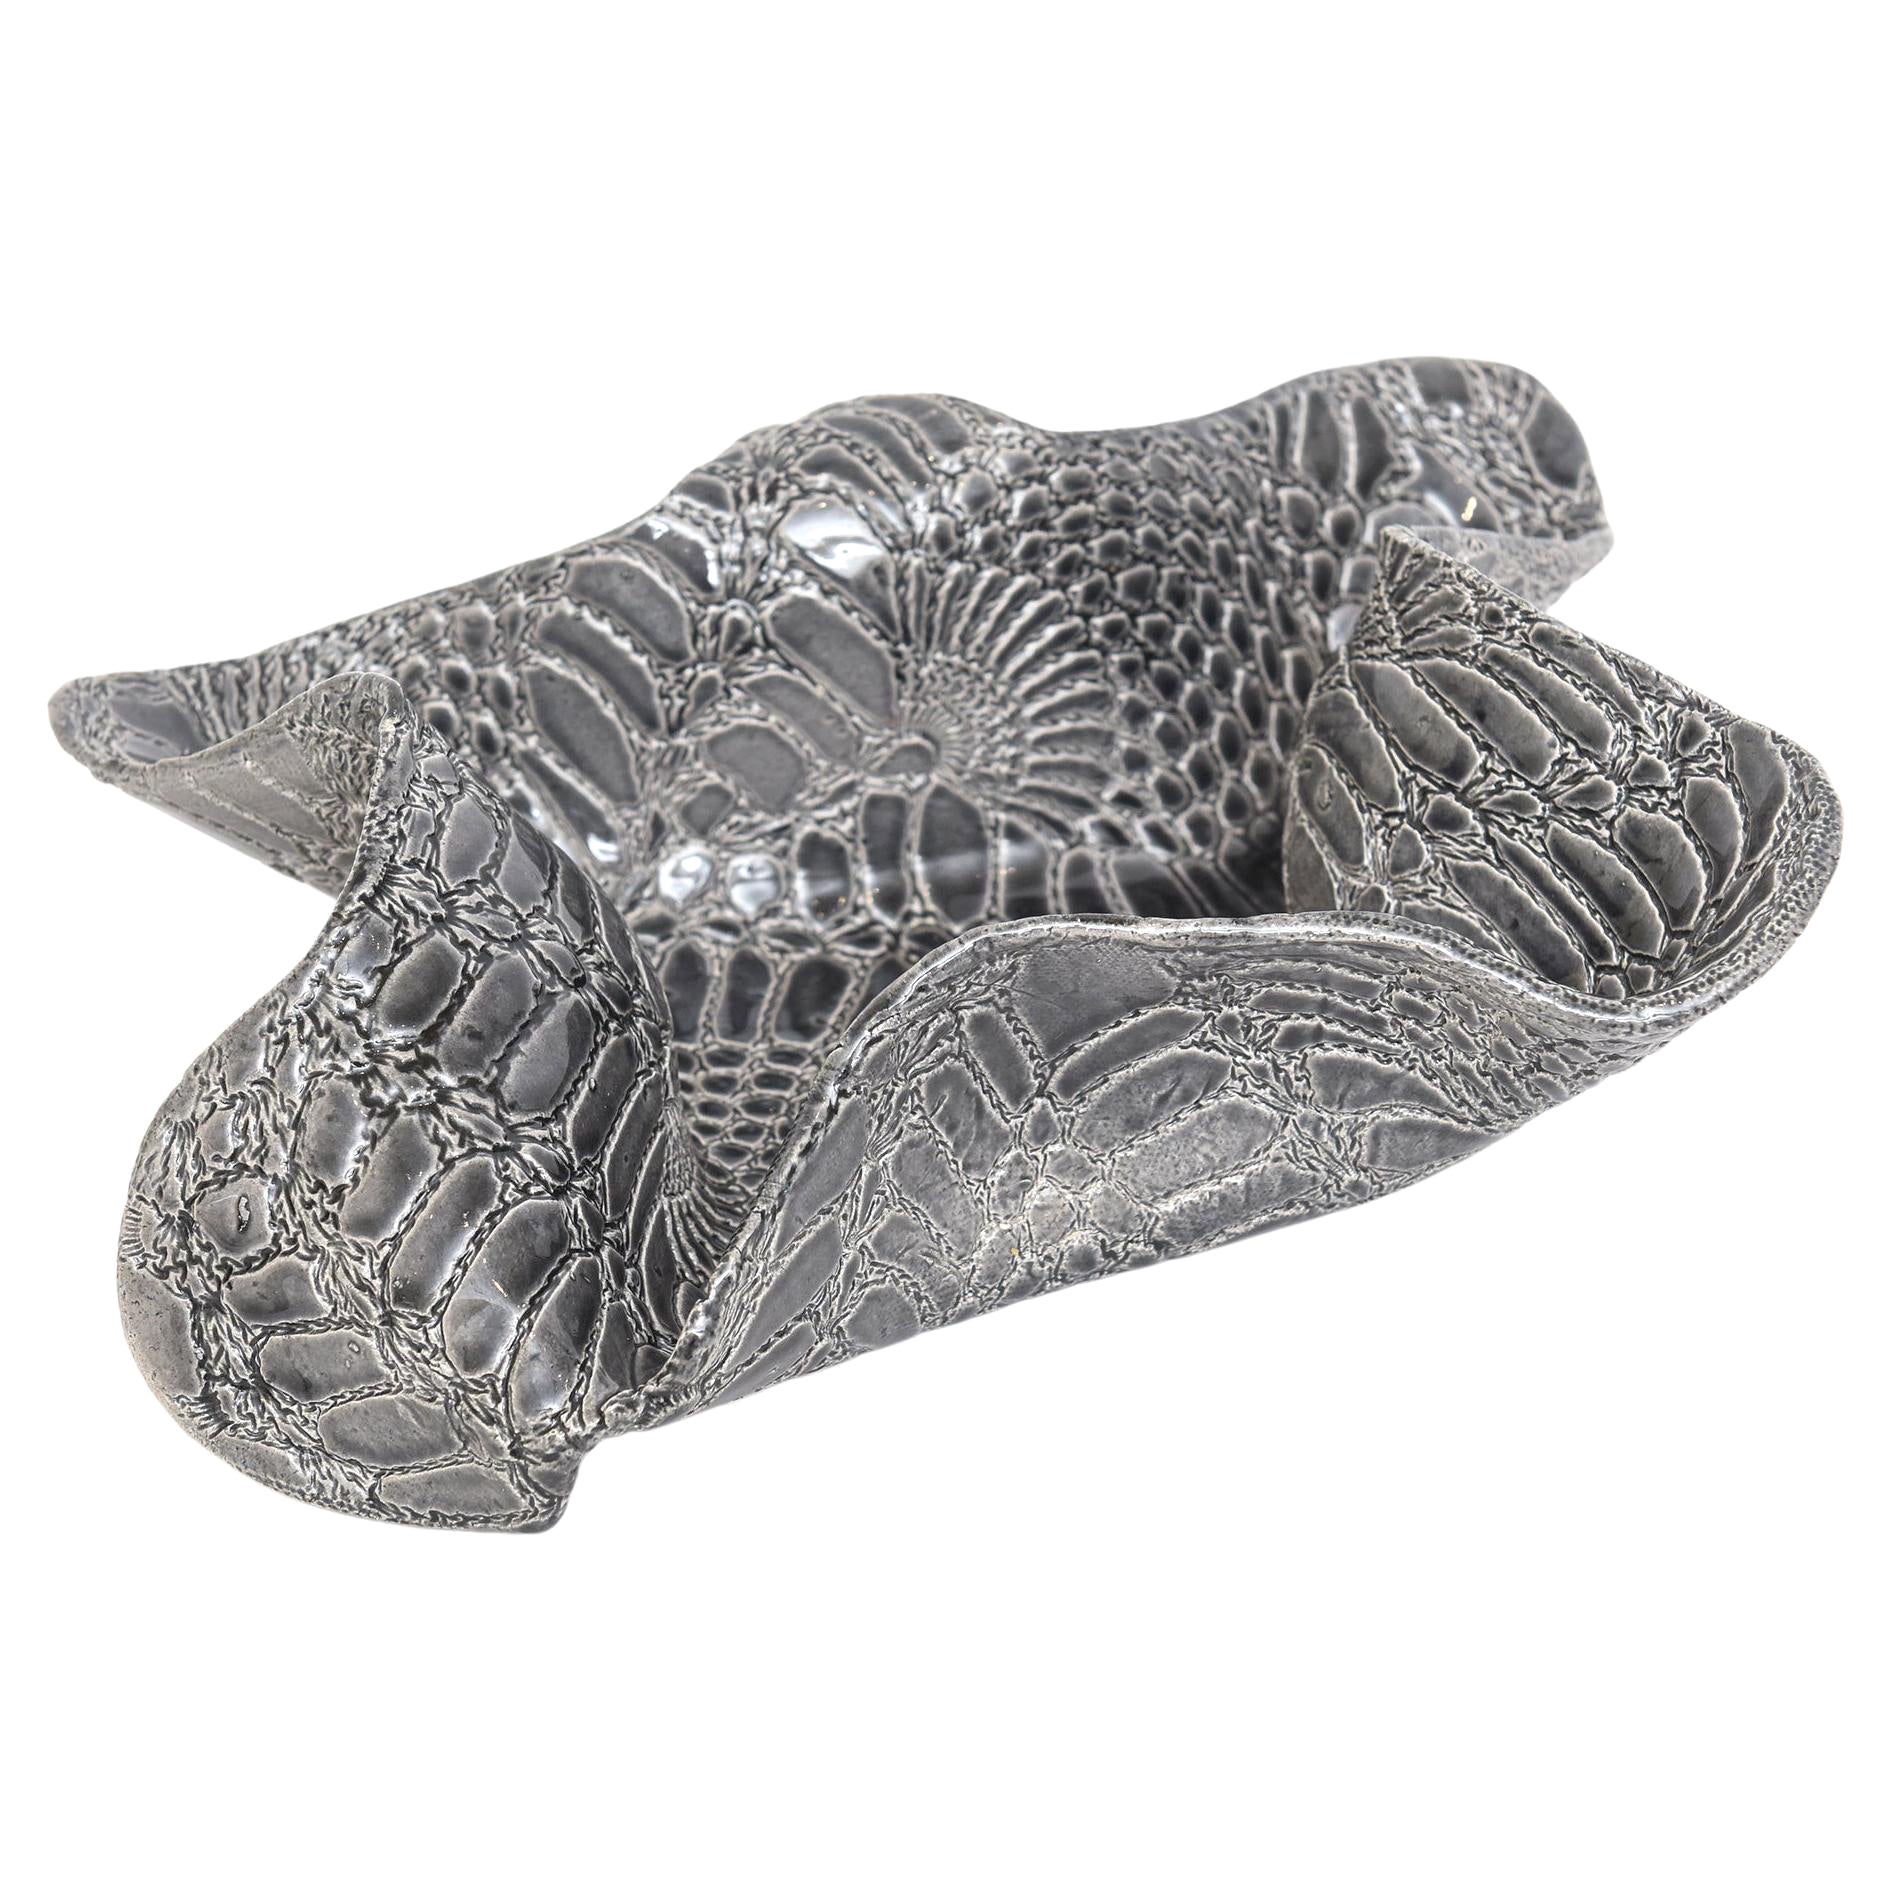 Ceramic Textural Snakeskin Pattern Grey White Biomorphic Sculptural Bowl